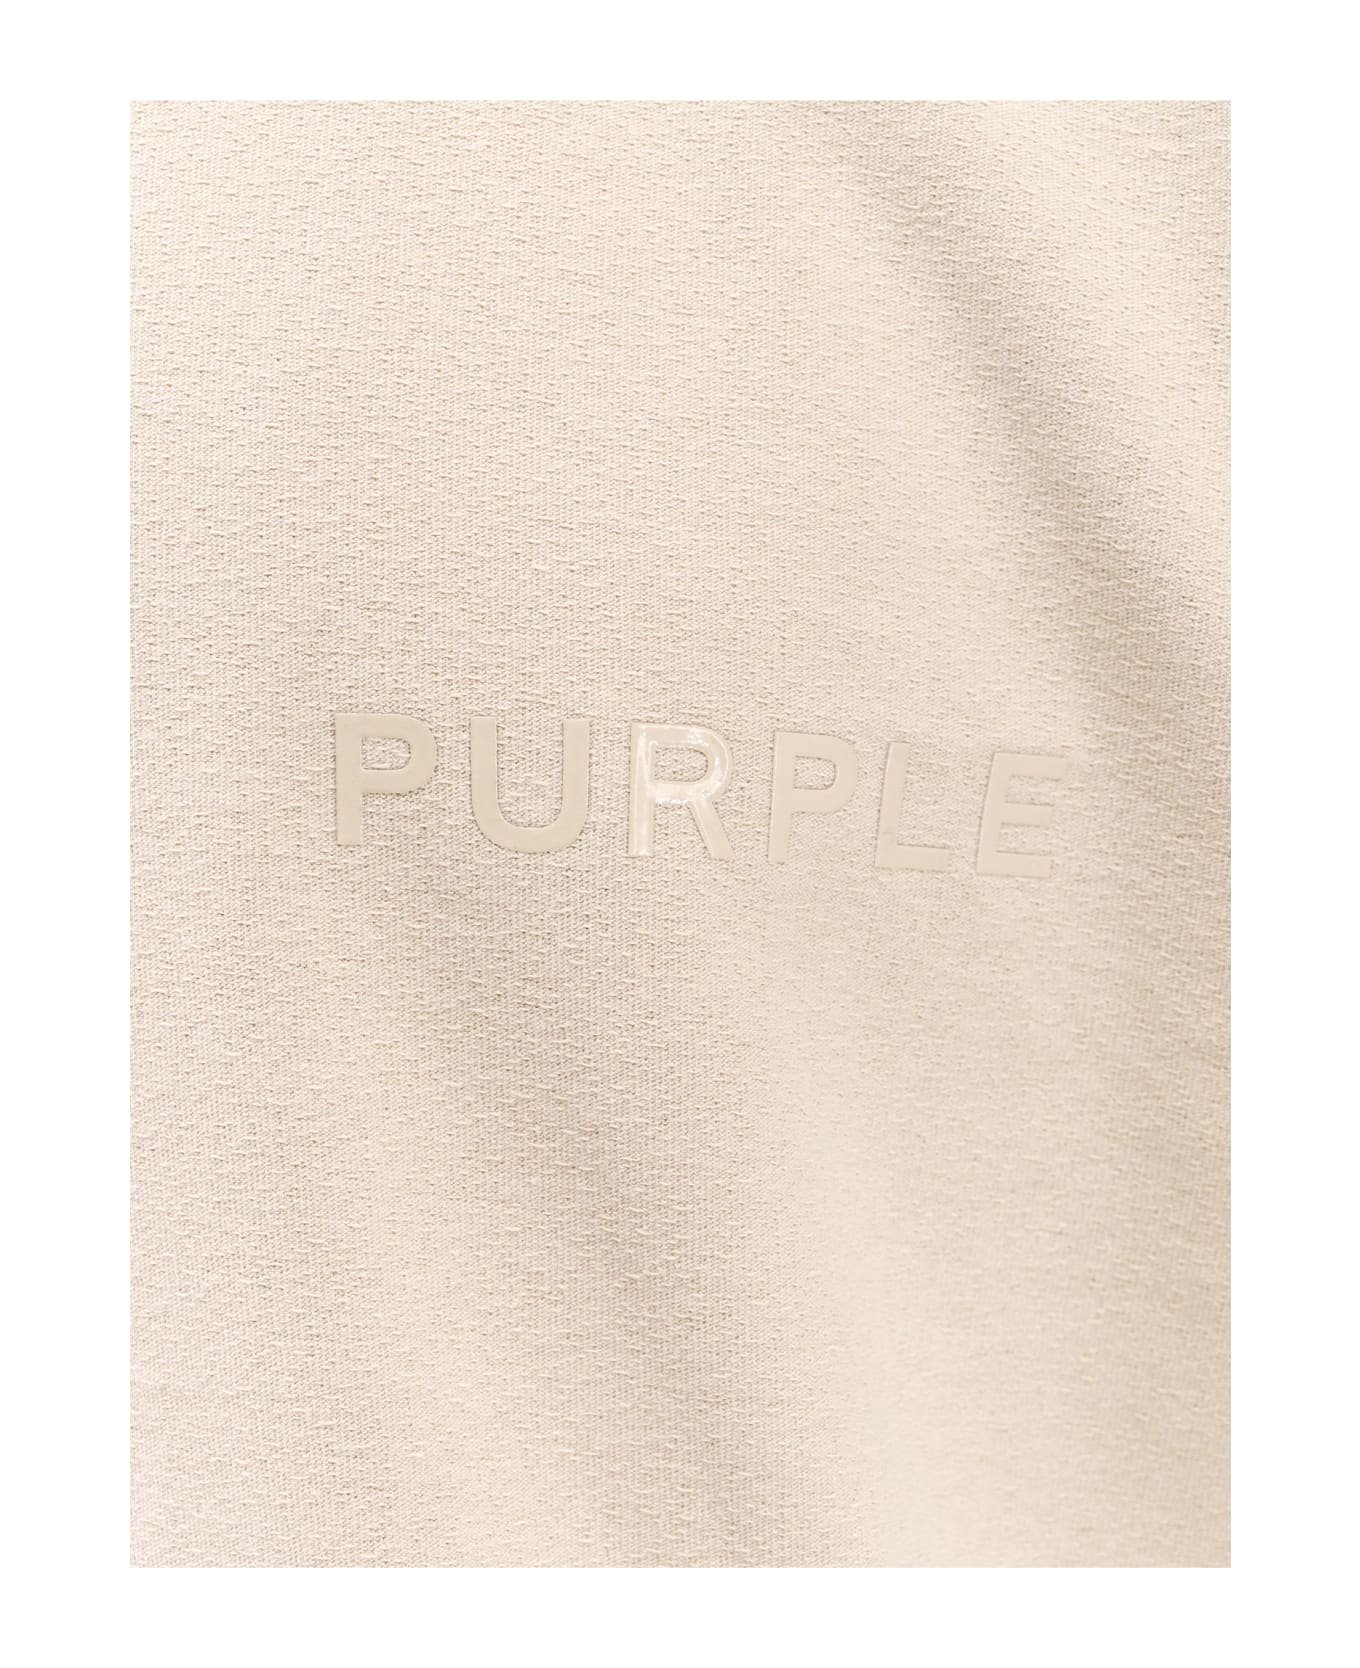 Purple Brand T-shirt - Beige シャツ